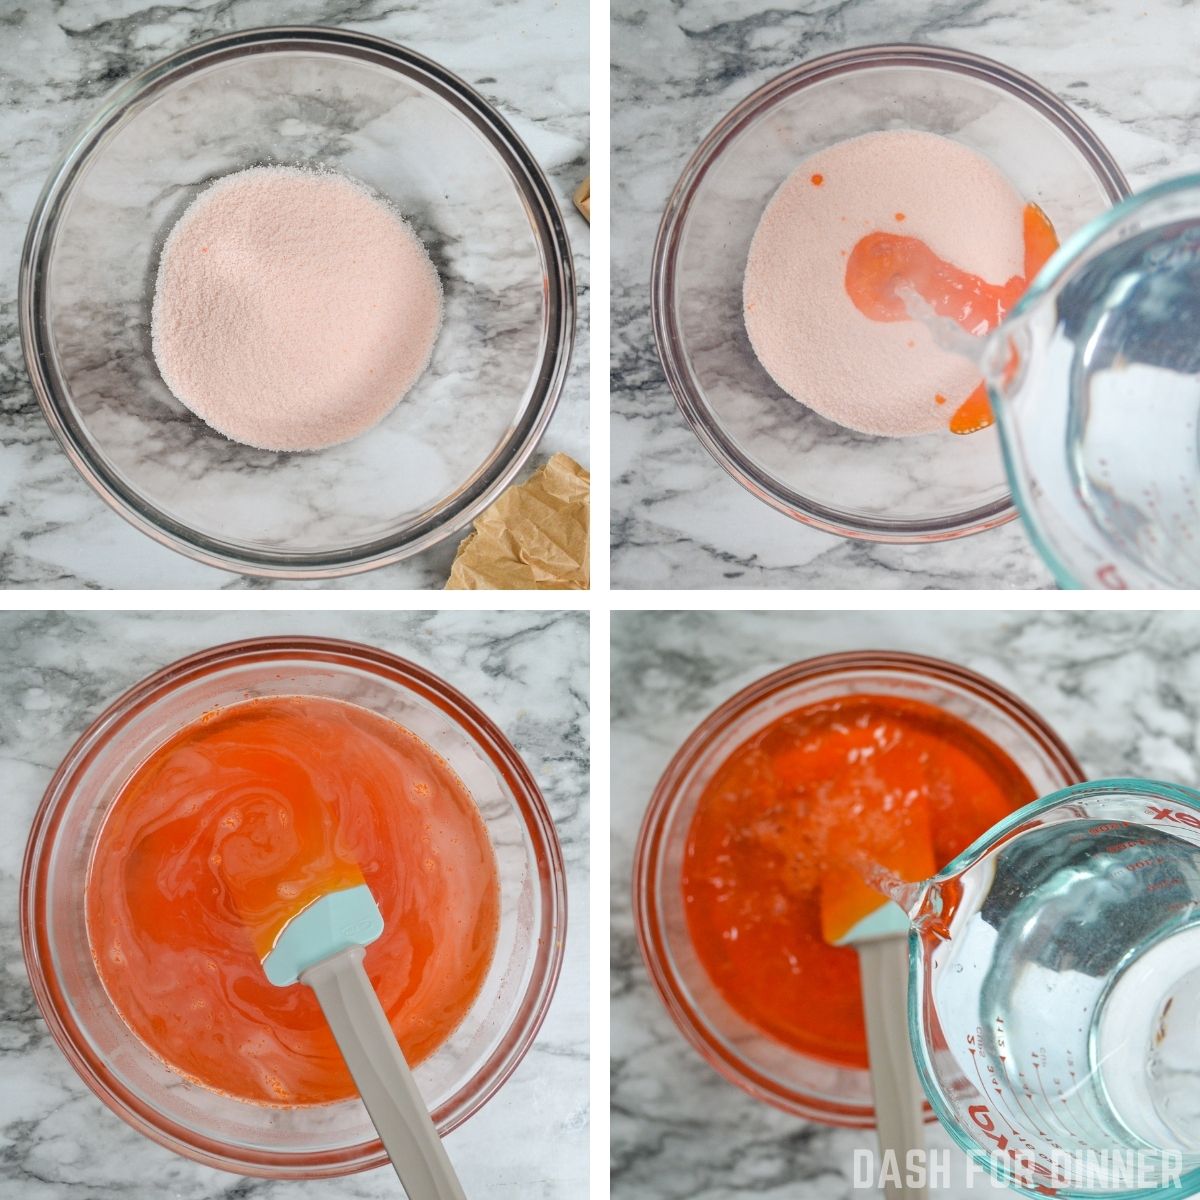 How to make orange jello